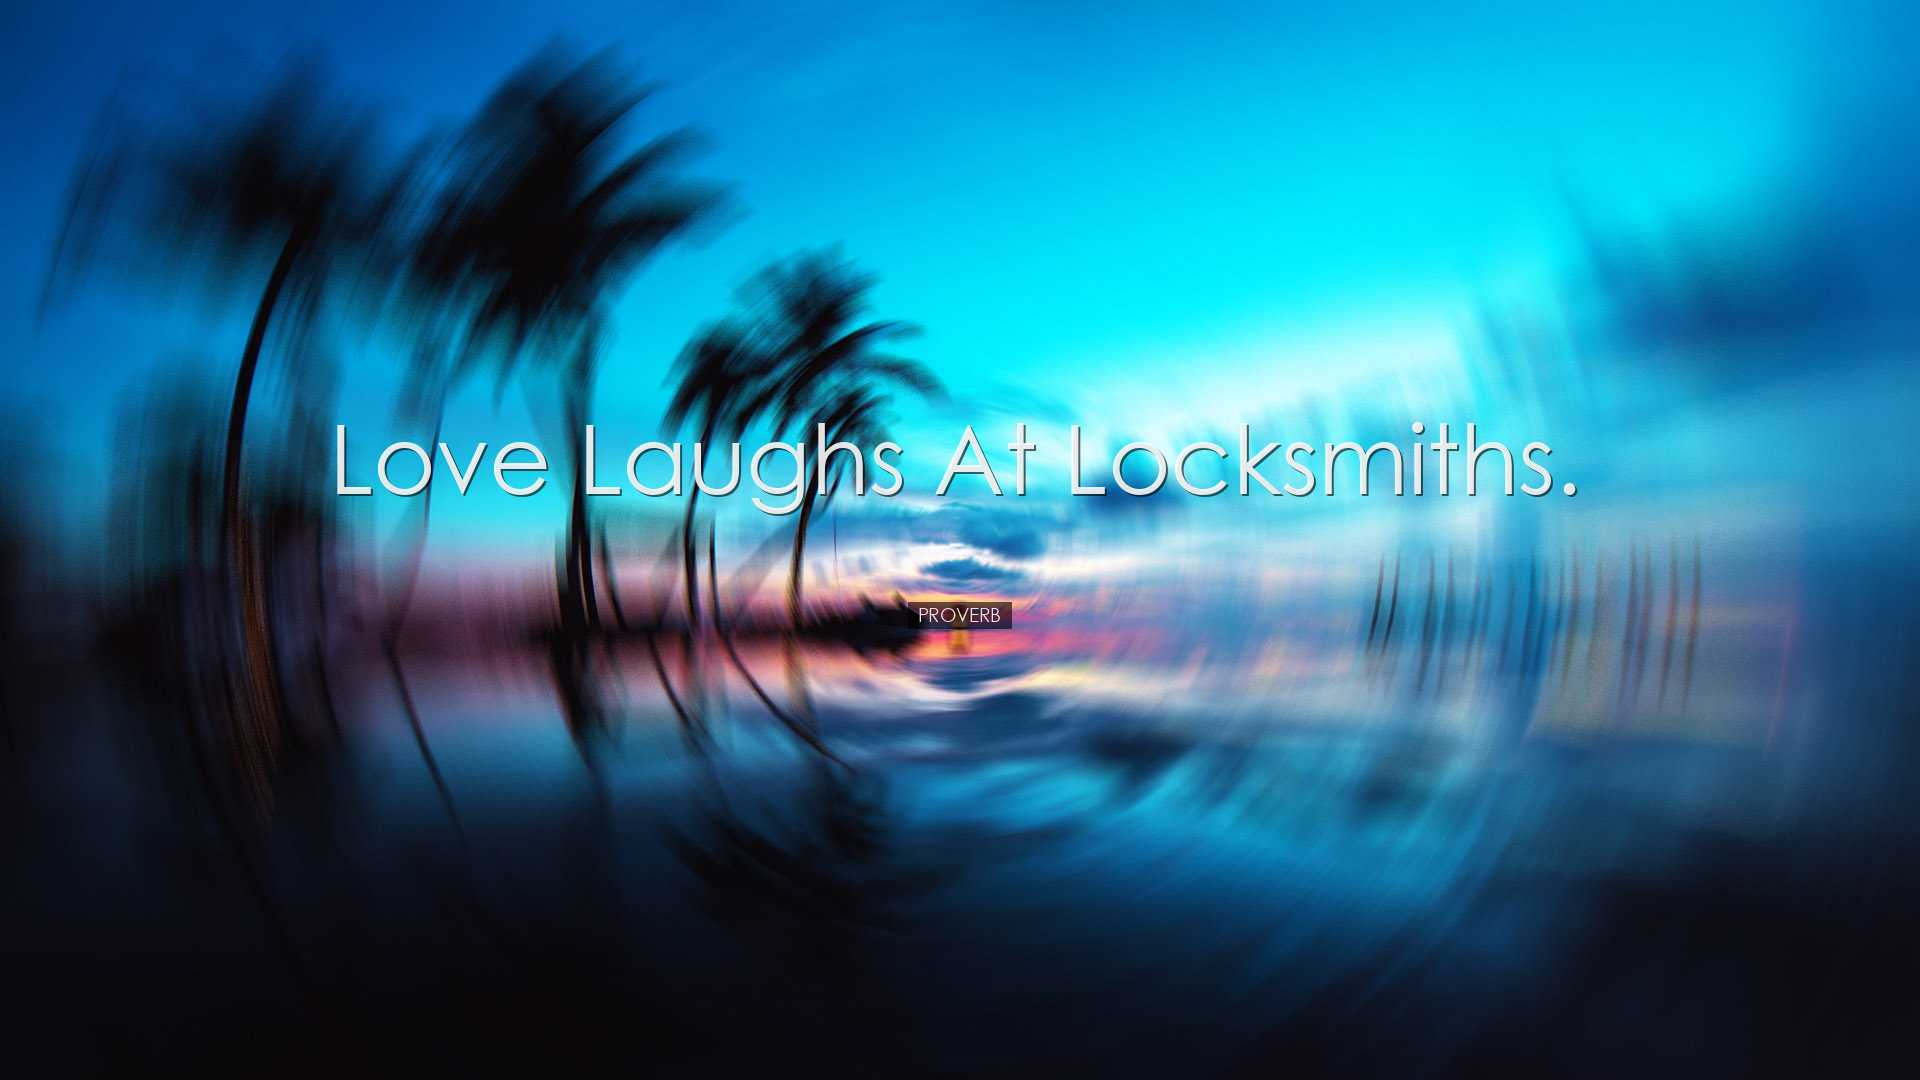 Love laughs at locksmiths. - Proverb